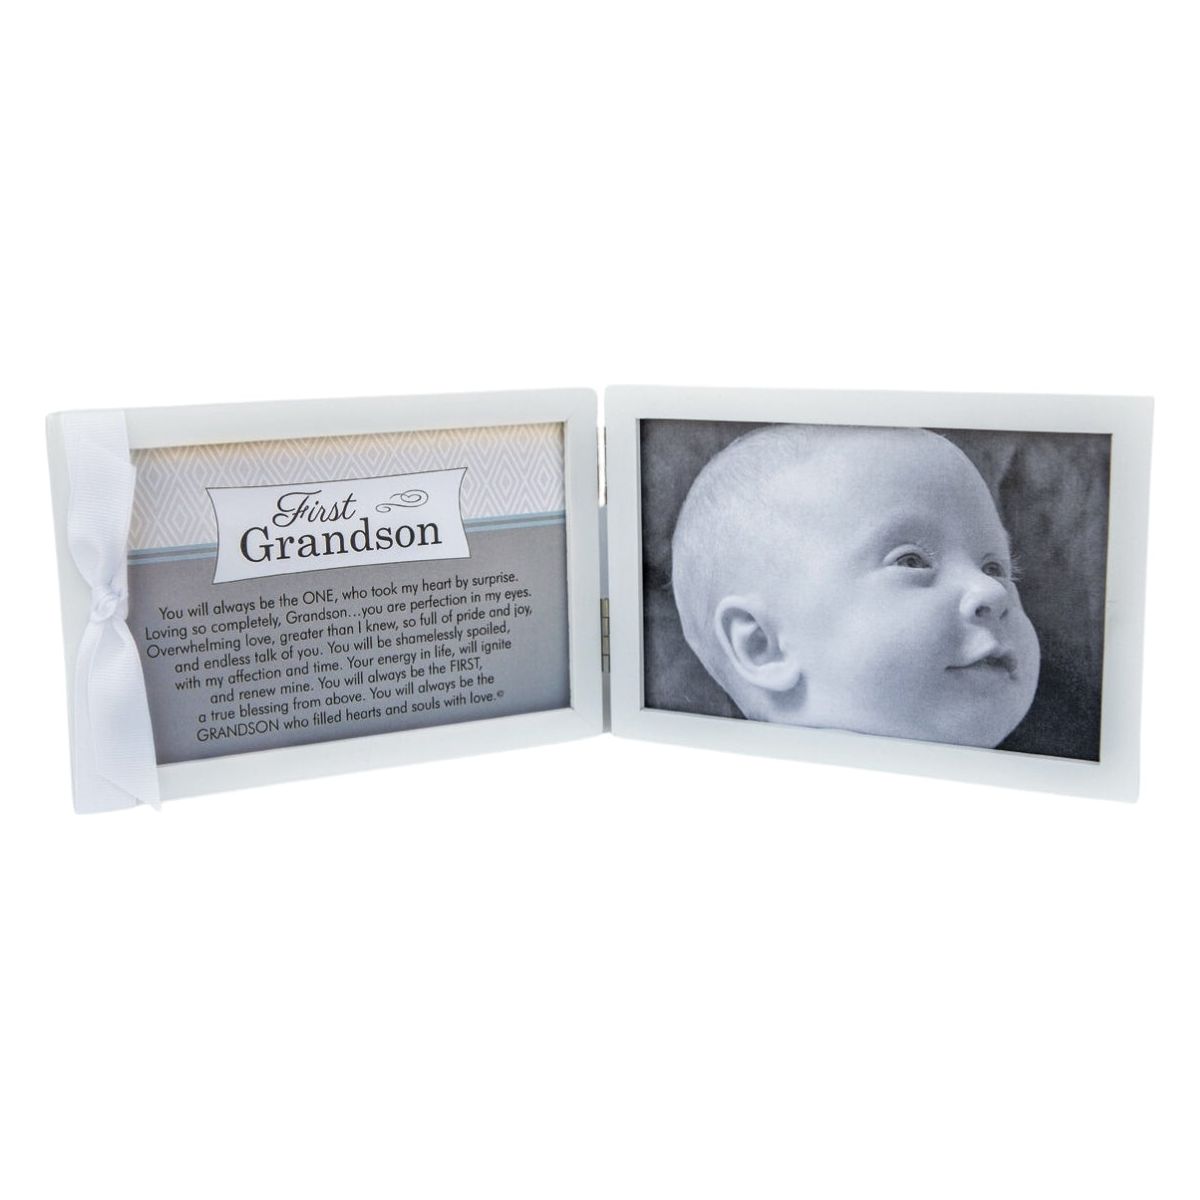 First Grandson Photo Frame 4x6